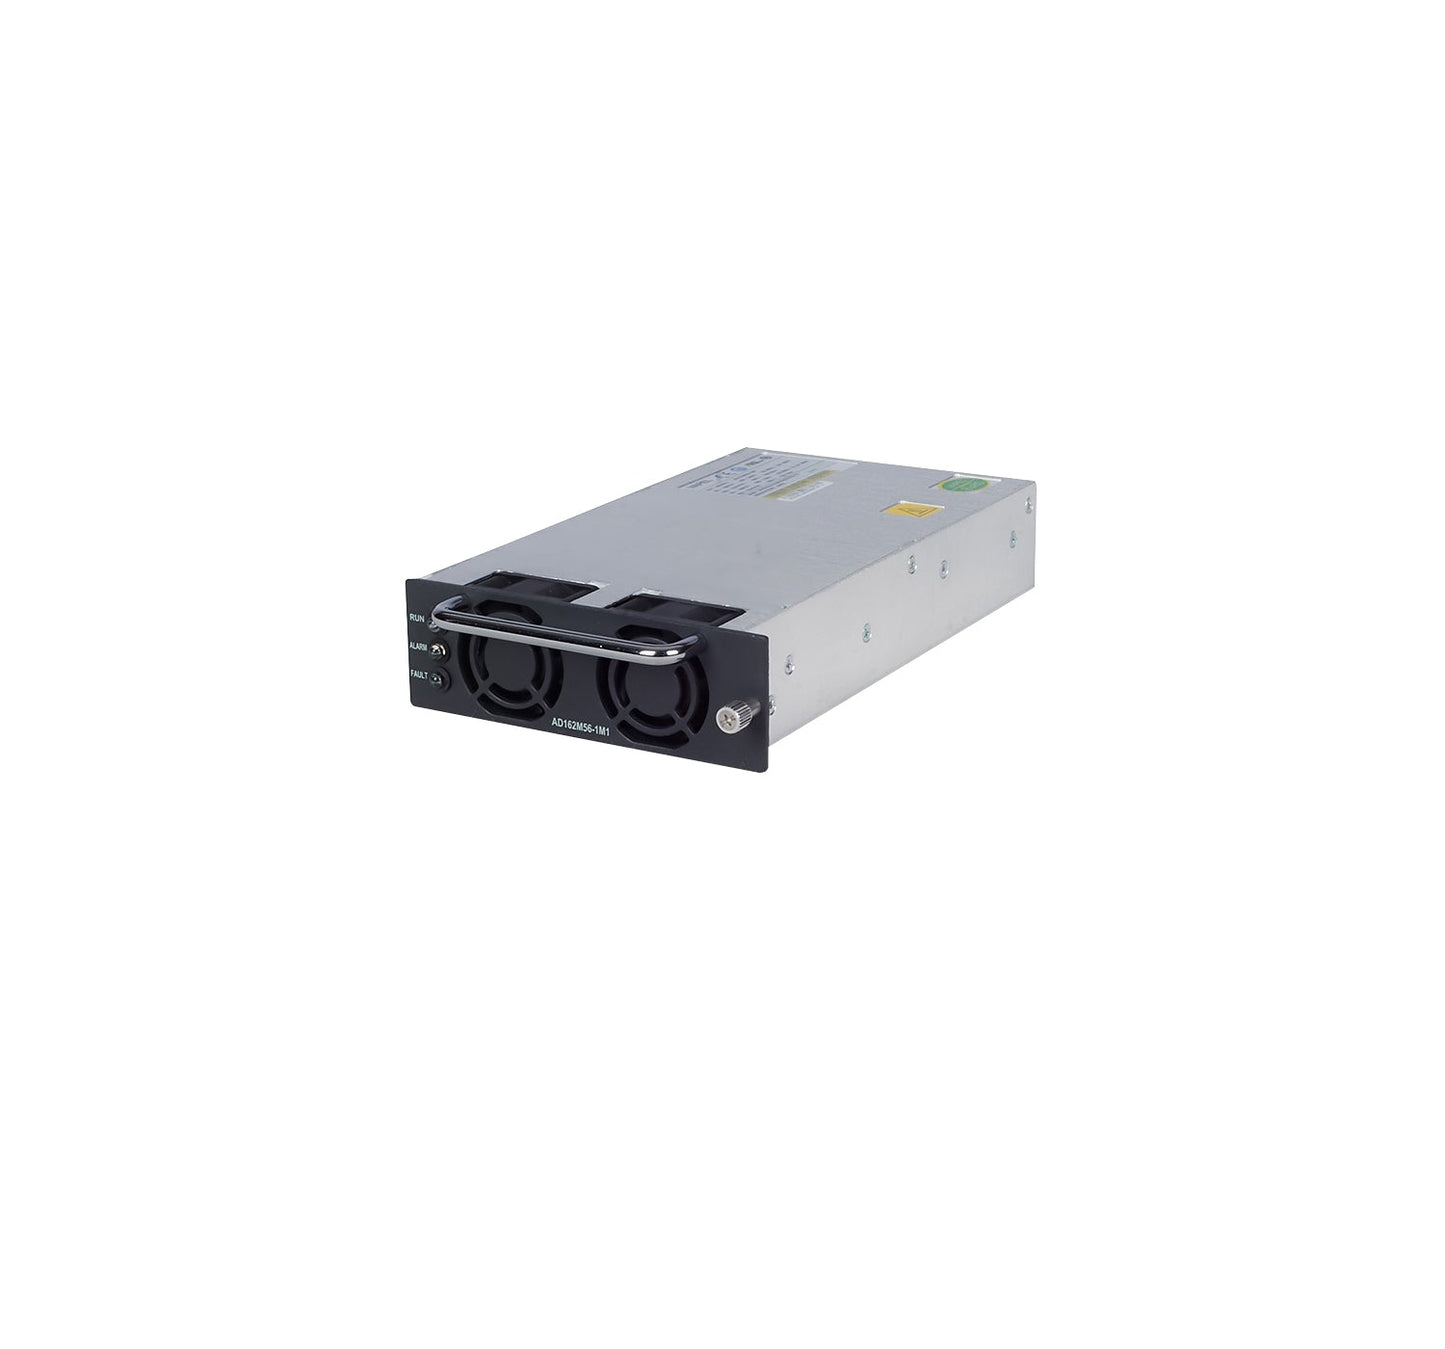 Hewlett Packard Enterprise Rps 800 Network Switch Component Power Supply